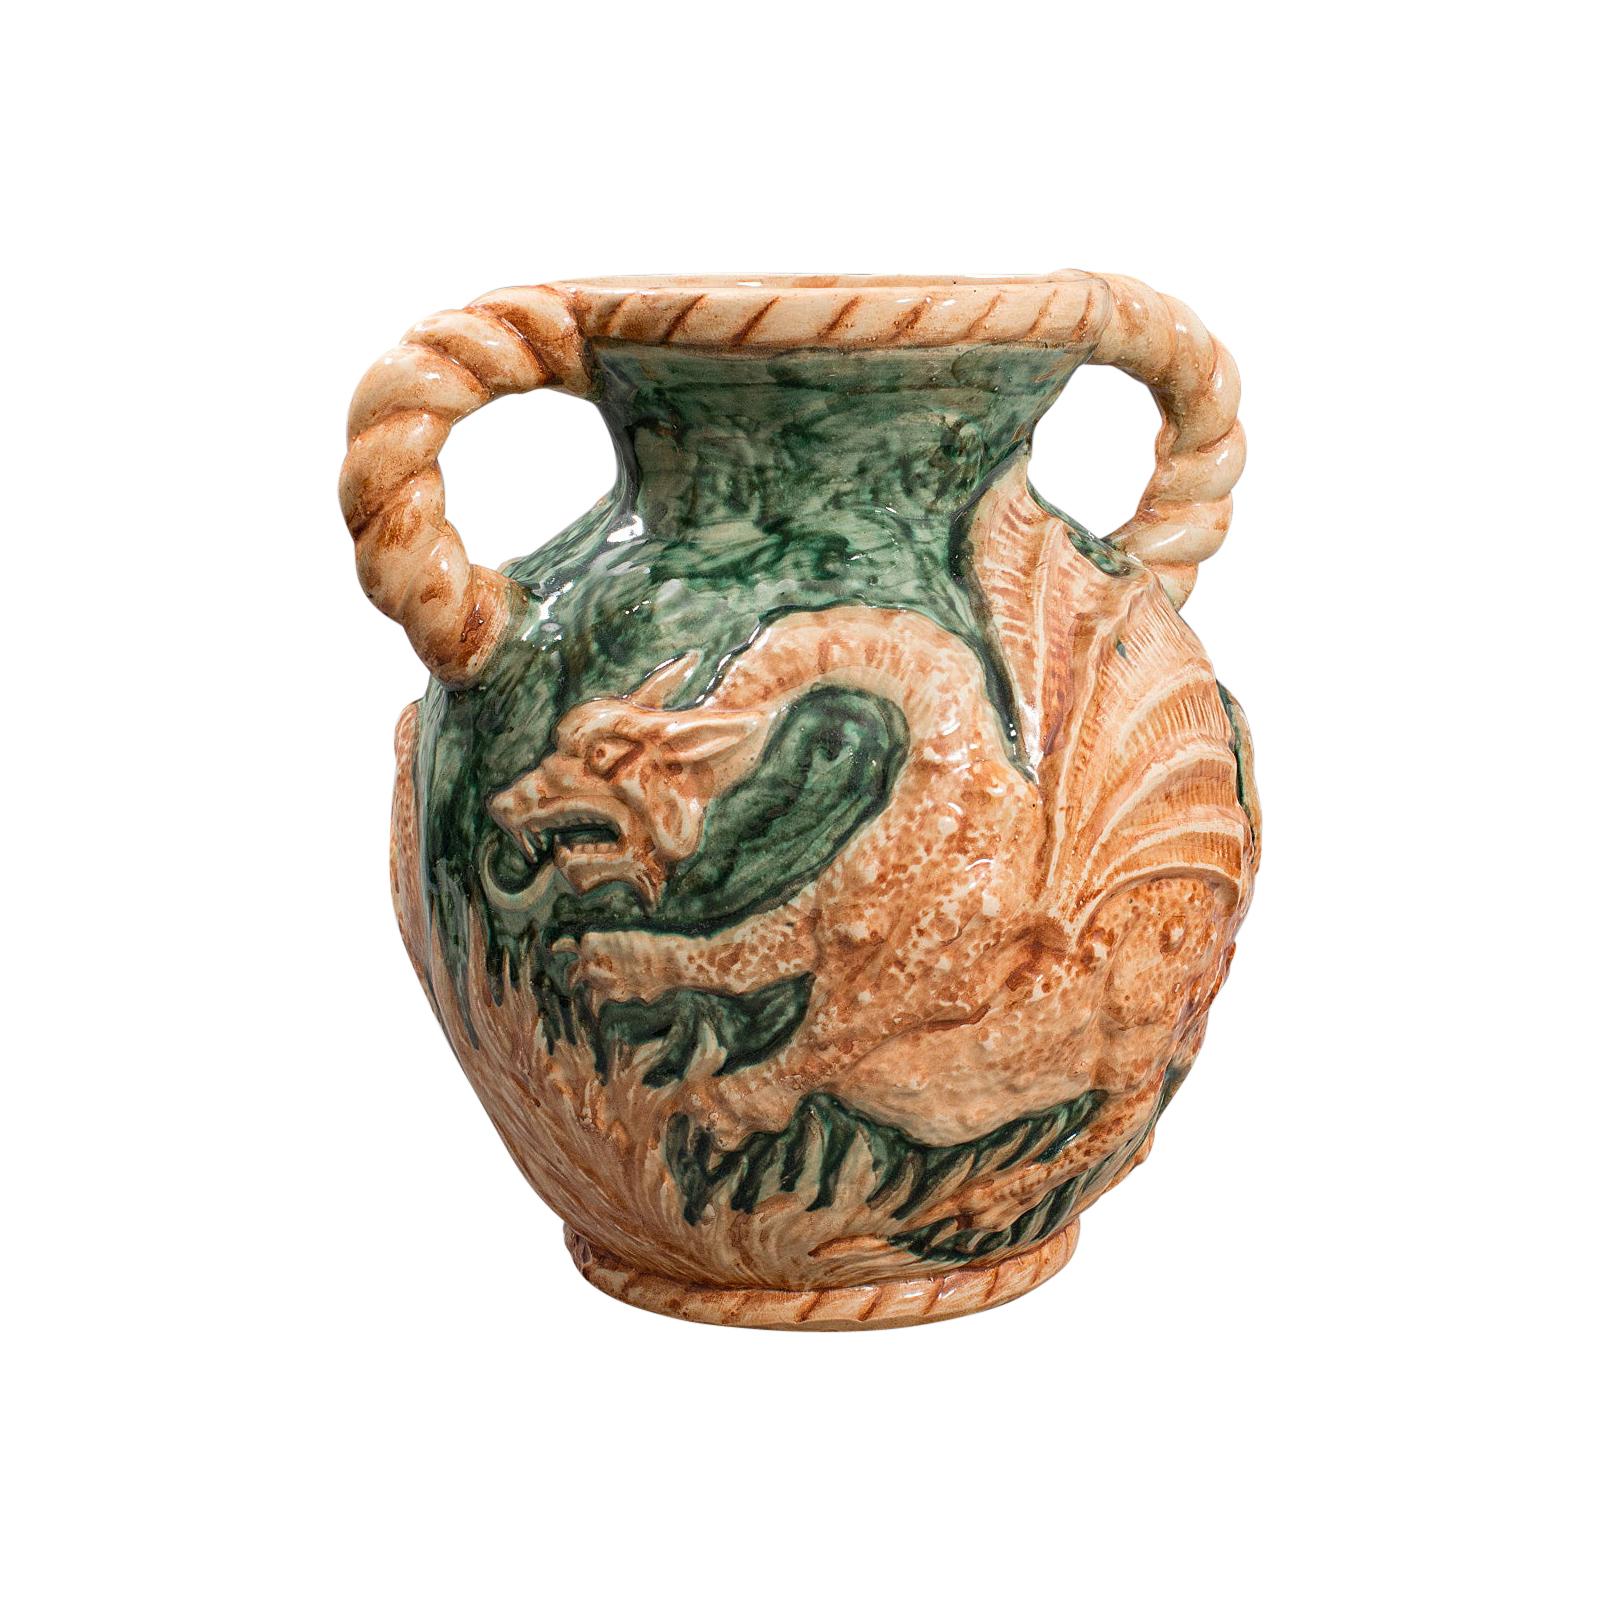 Antique Decorative Vase, Continental, Ceramic, Baluster Urn, Dragon, Victorian